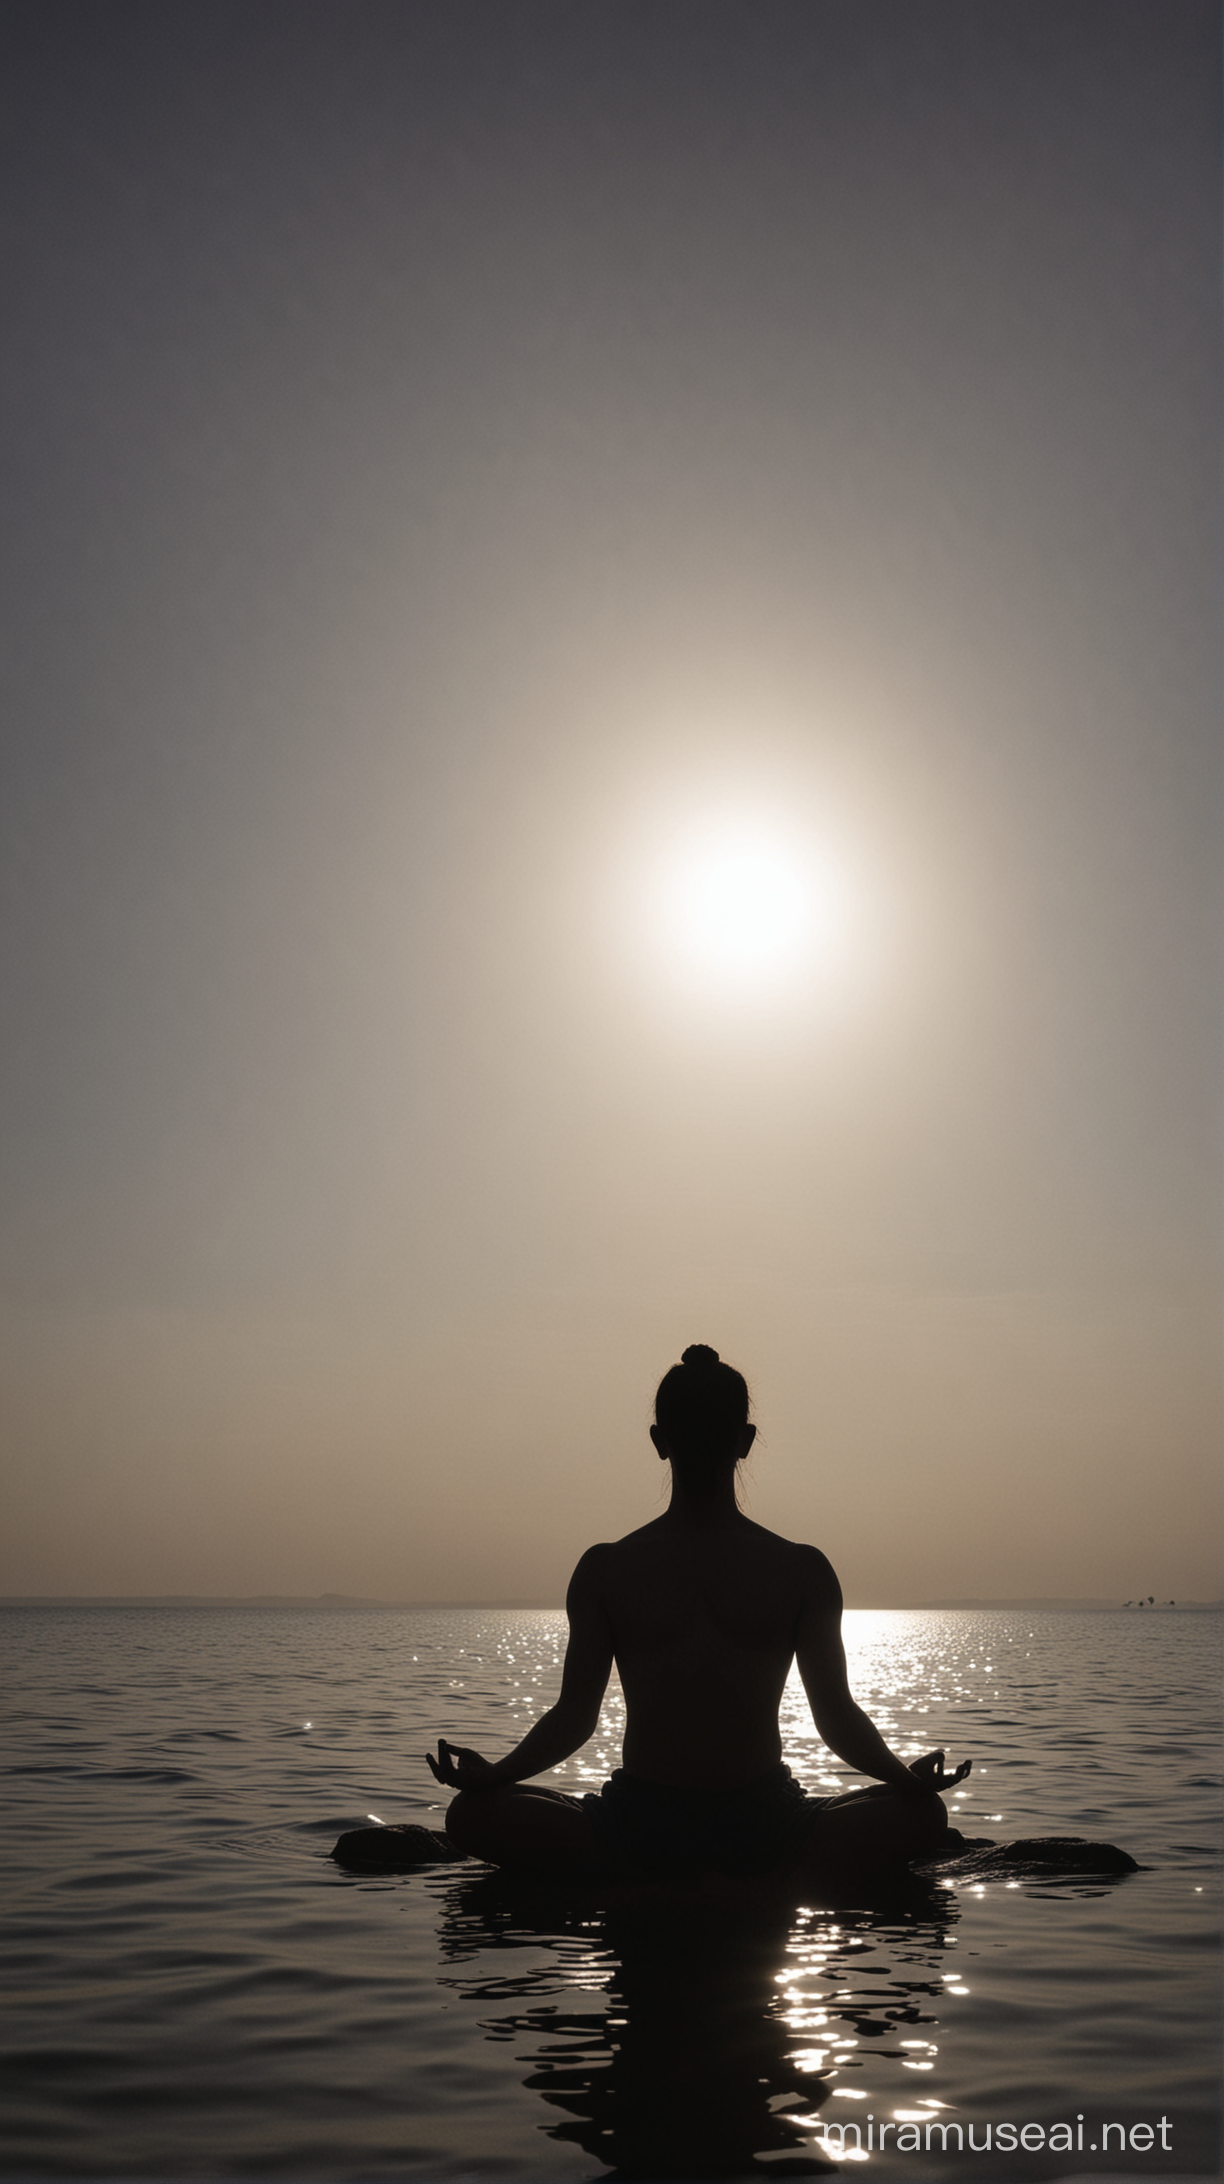 Silhouette meditating, should be spiritual